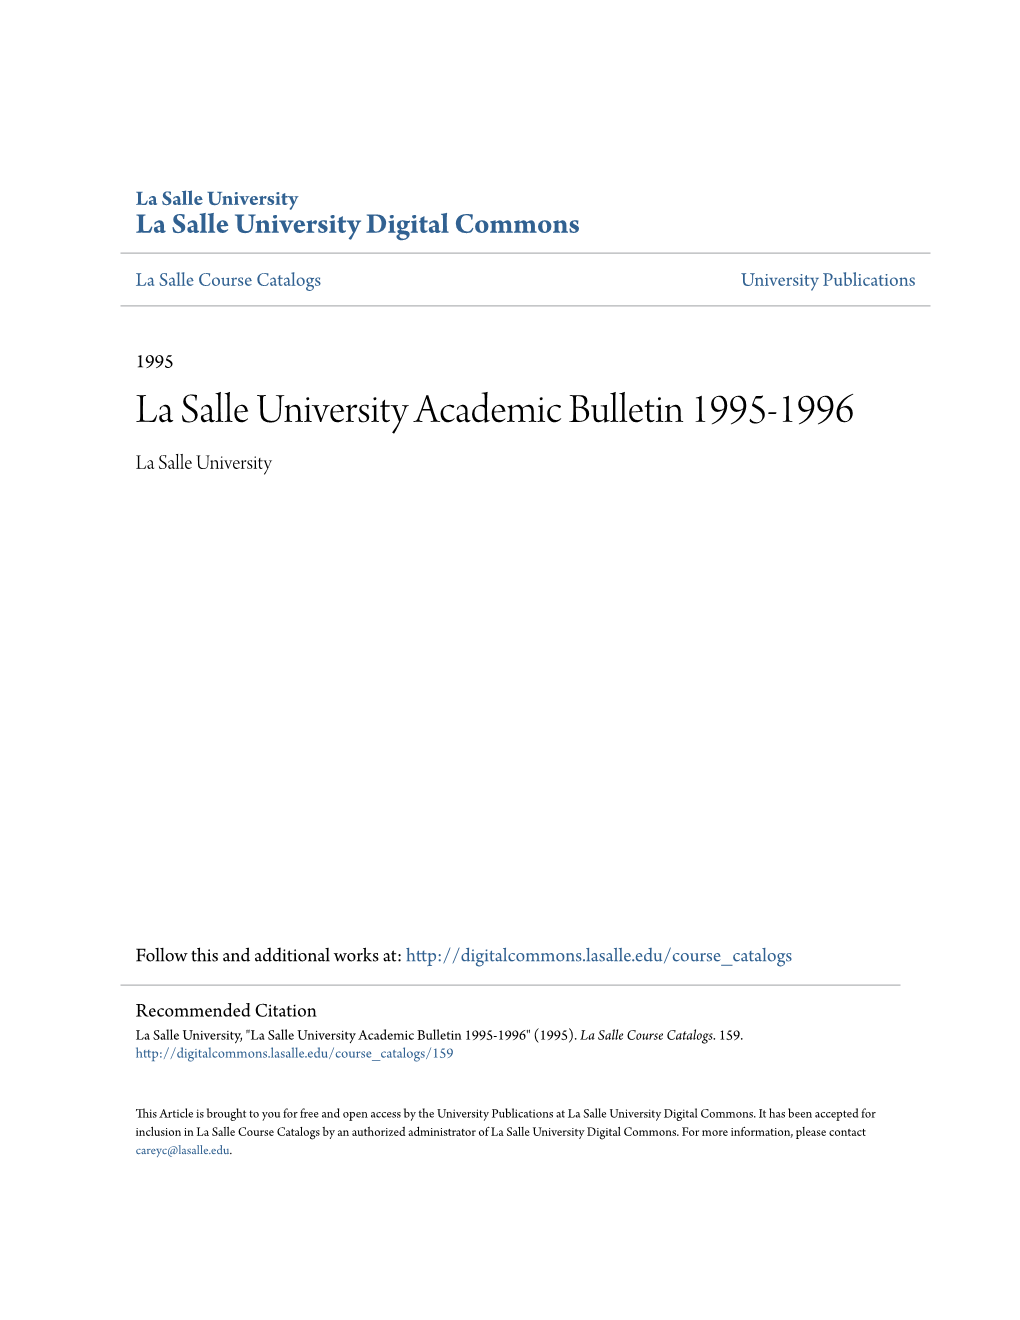 La Salle University Academic Bulletin 1995-1996 La Salle University